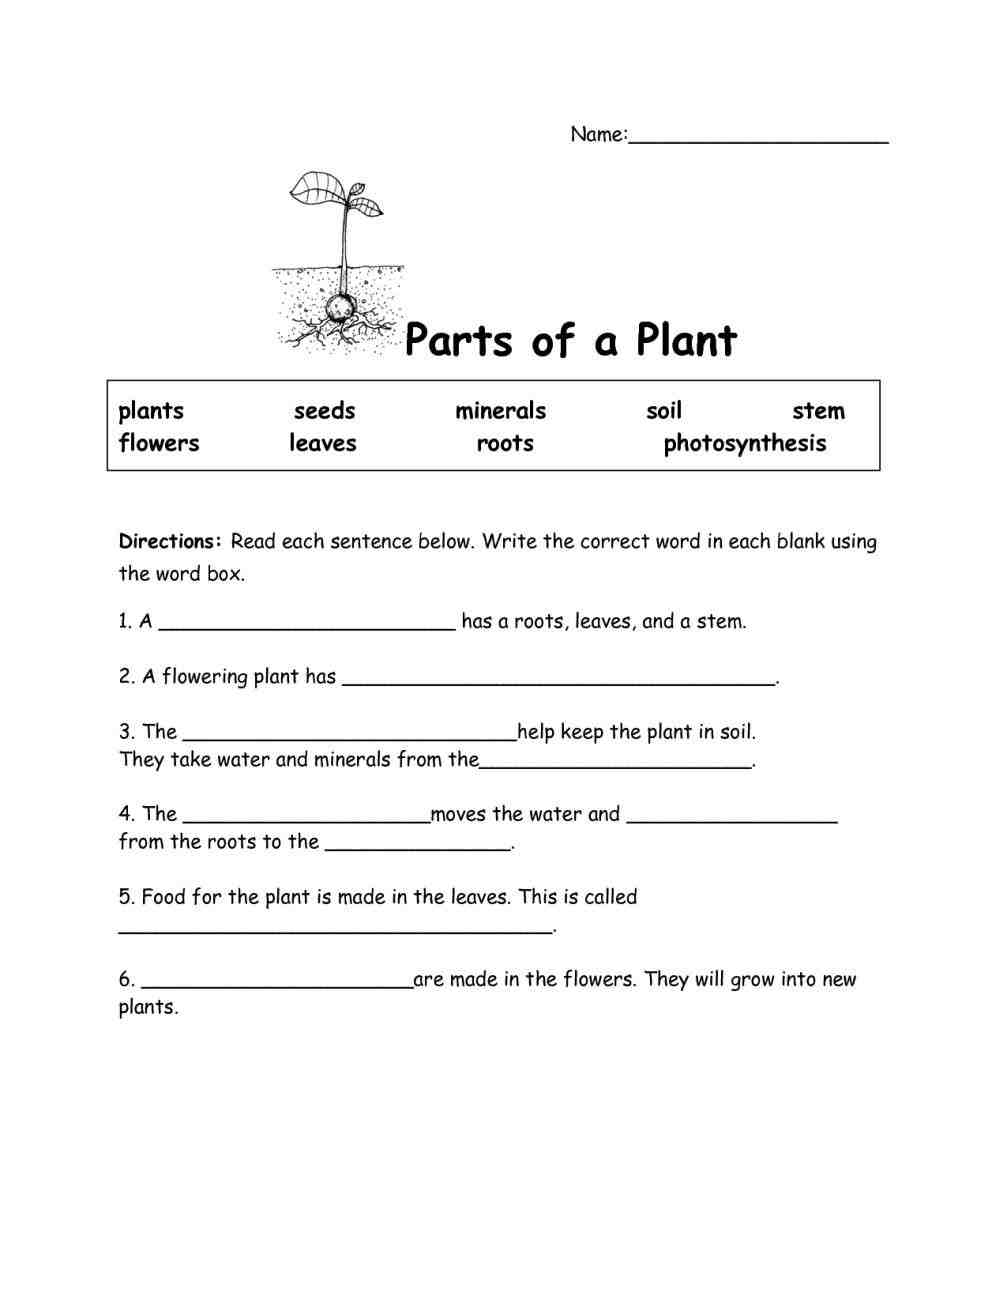 Science Worksheets For Grade 3 For Plants